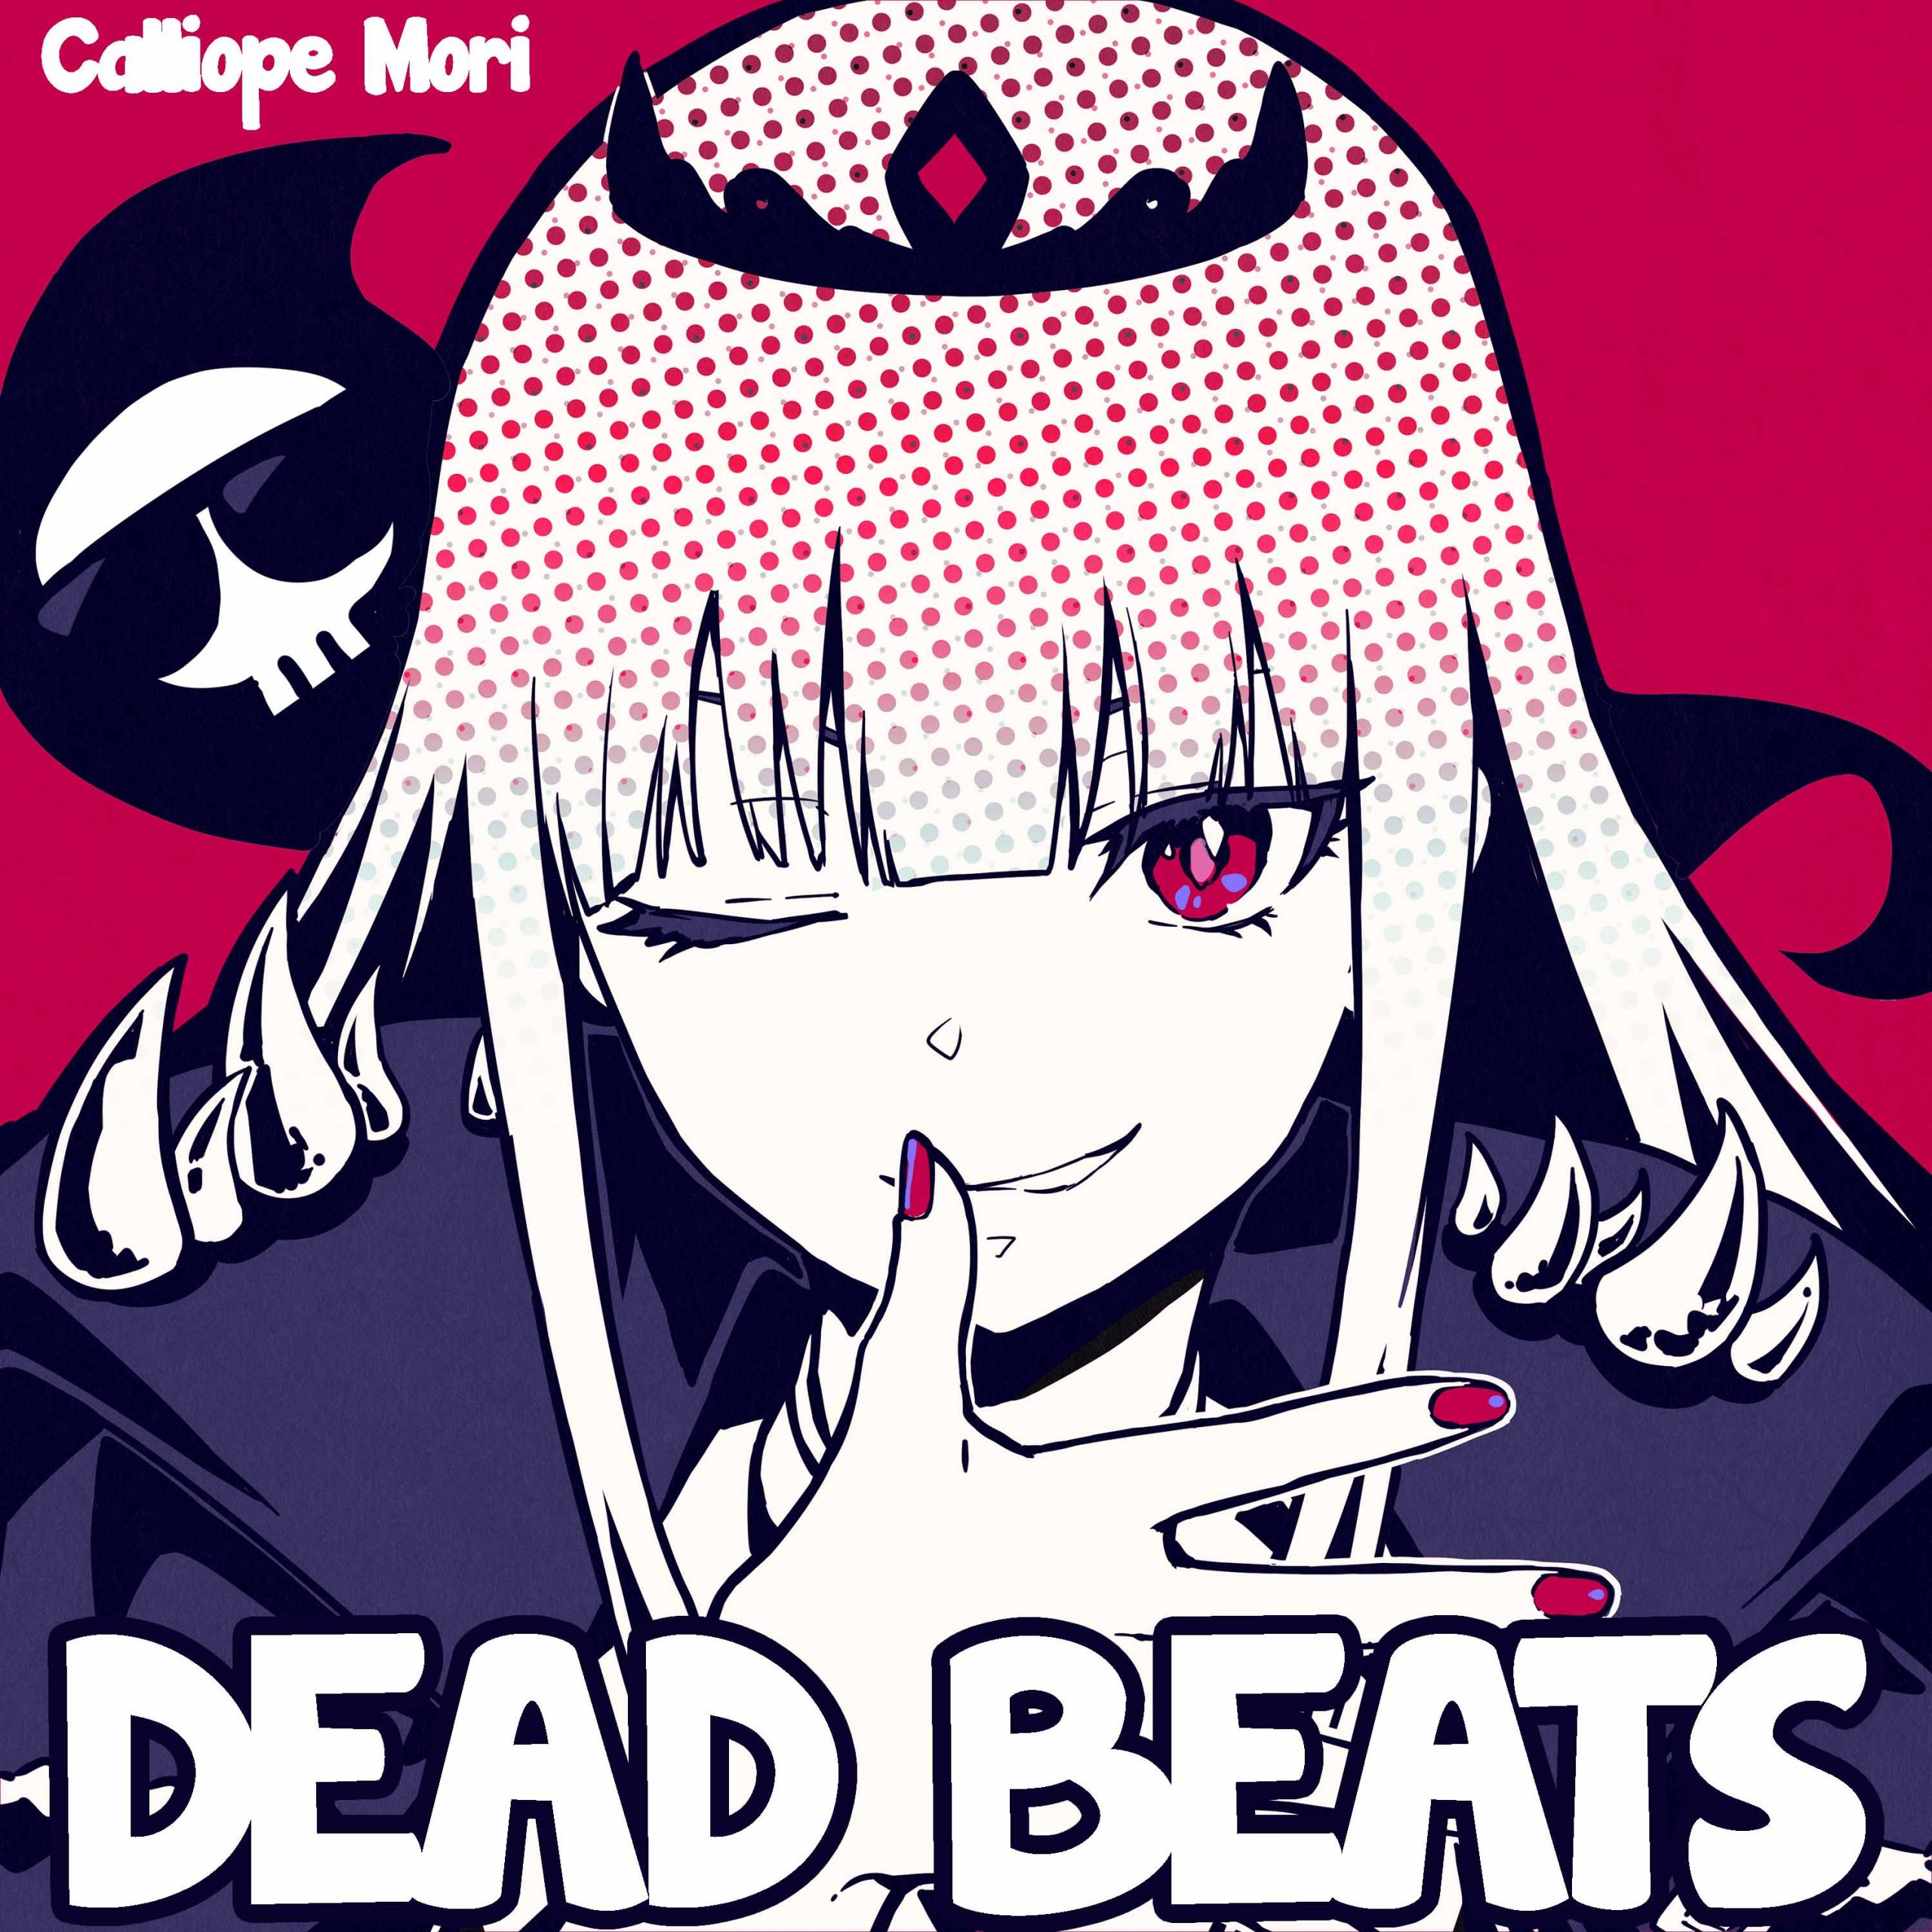 [Single] 森カリオペ 1stシングル 「DEAD BEATS」 (2020.10.20/MP3/RAR) - jpfunny.org